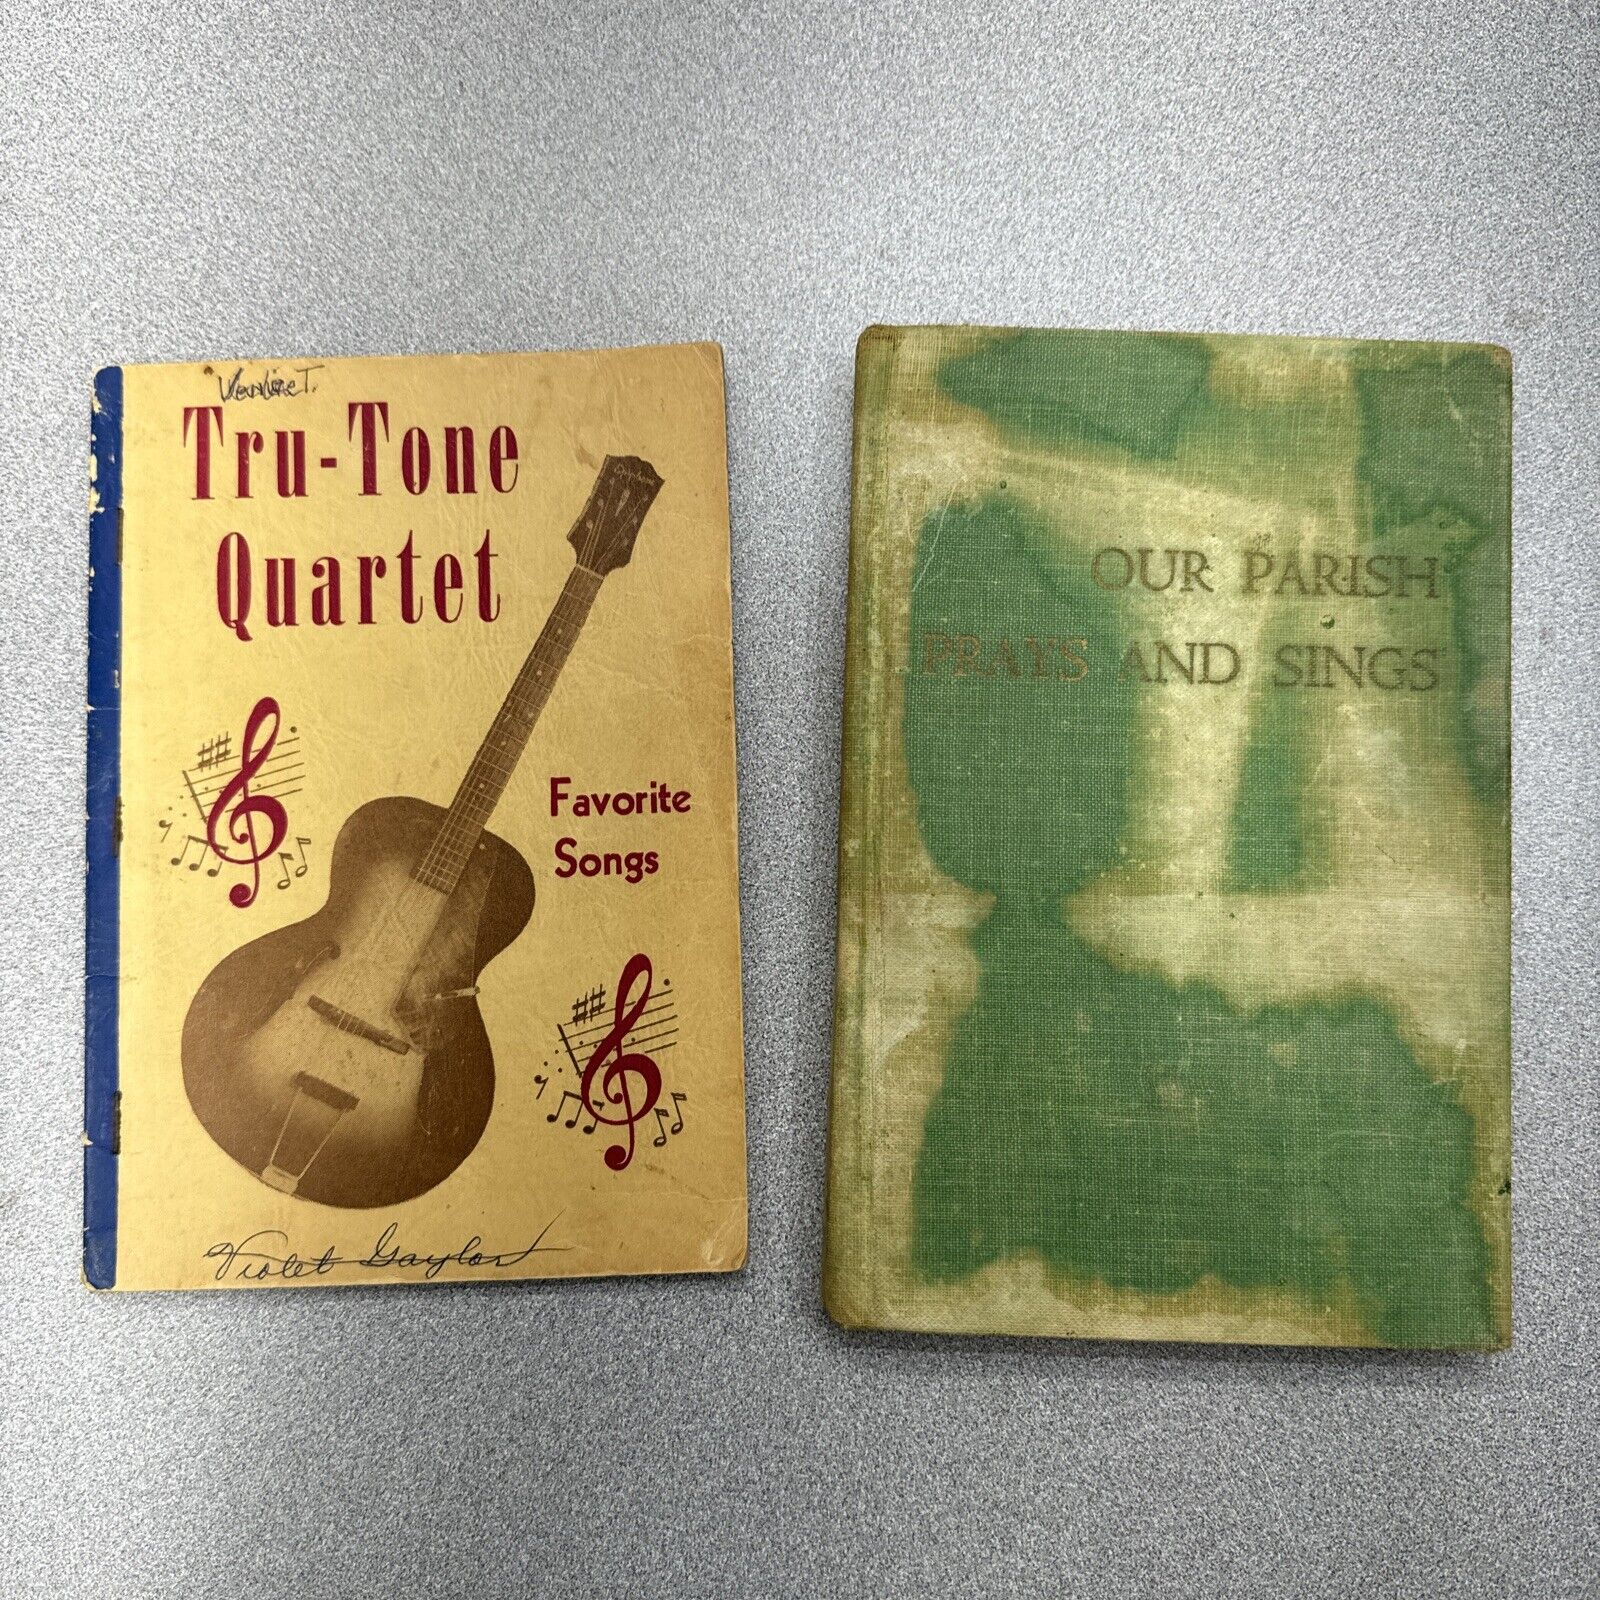 Vtg Books Tru-Tone Quartet Songs & Our Parish Prays and Sings 1959